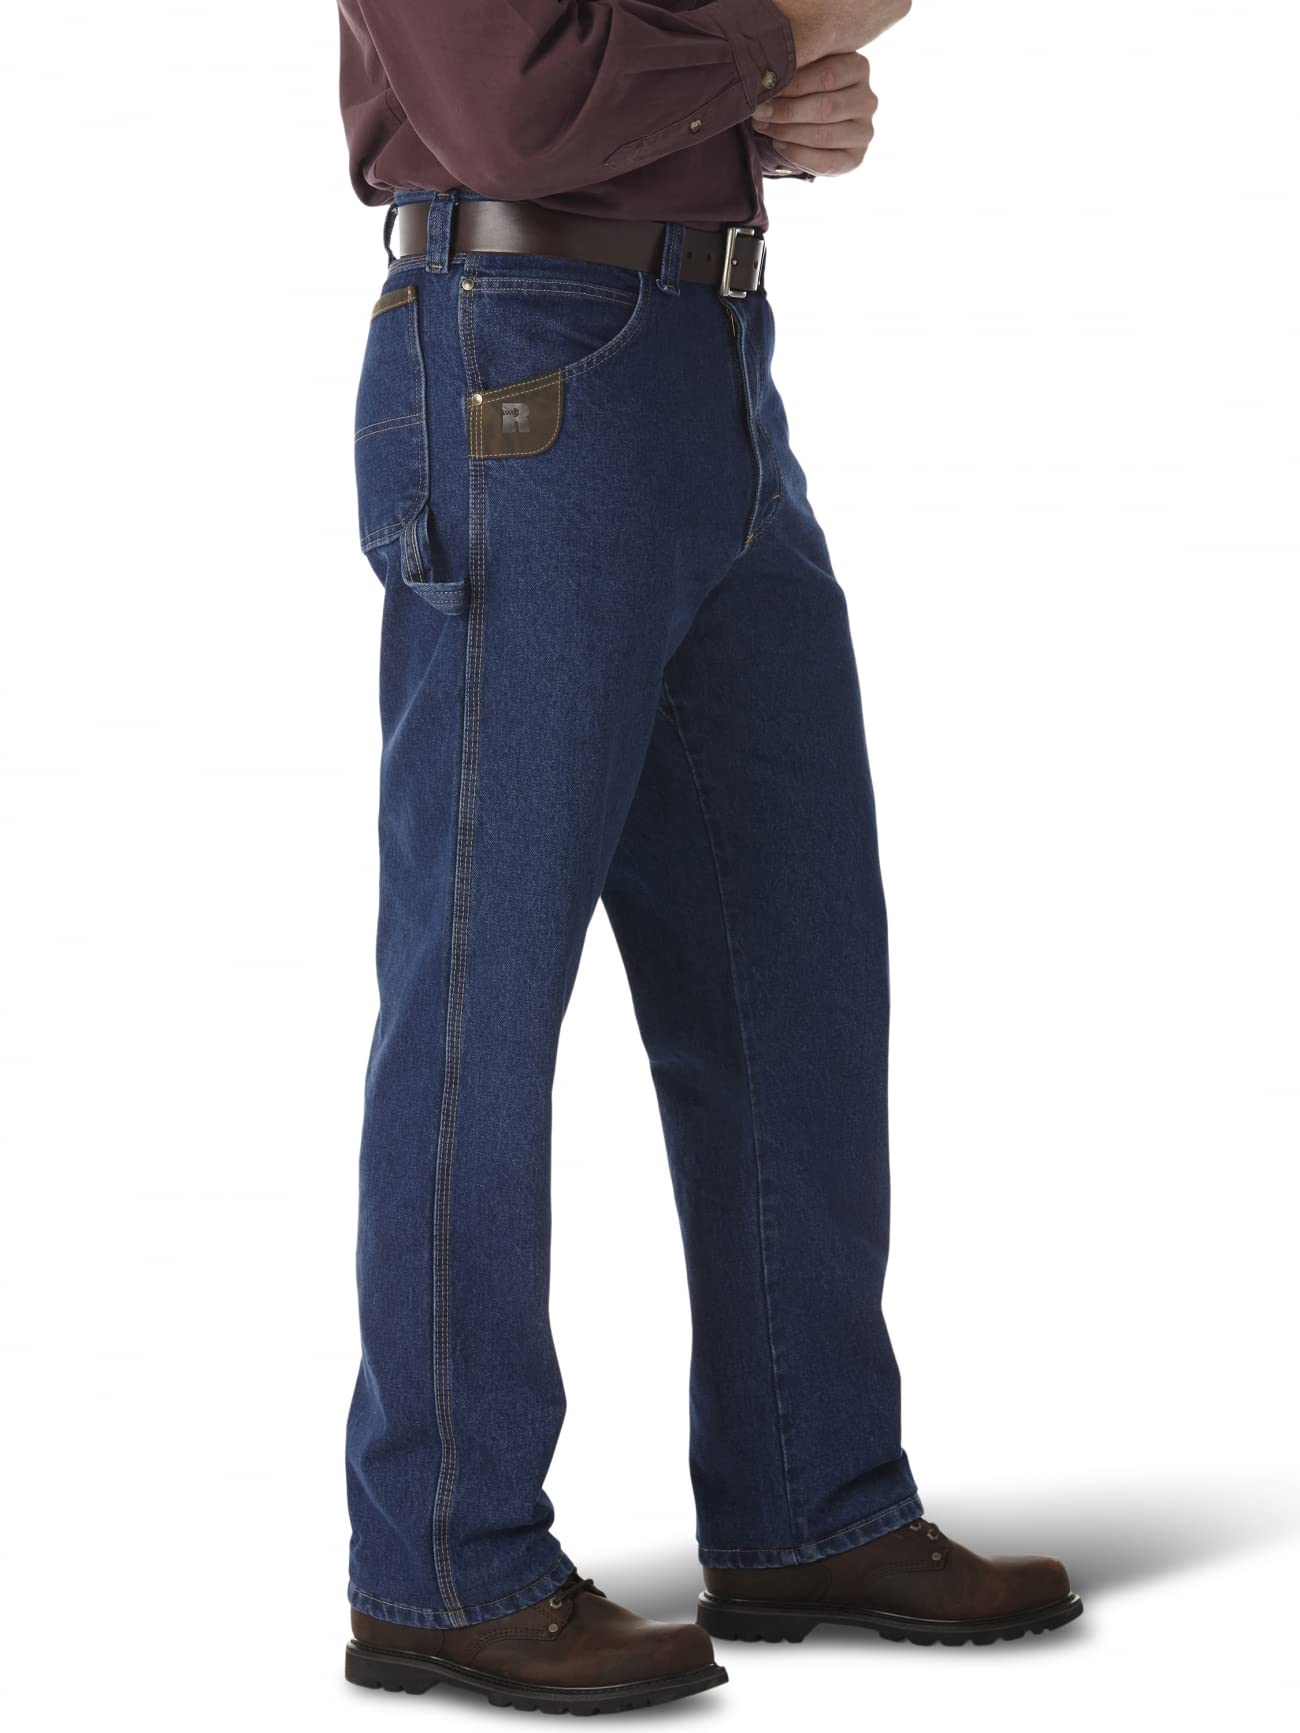 Wrangler Riggs Workwear Men's Workhorse Jean